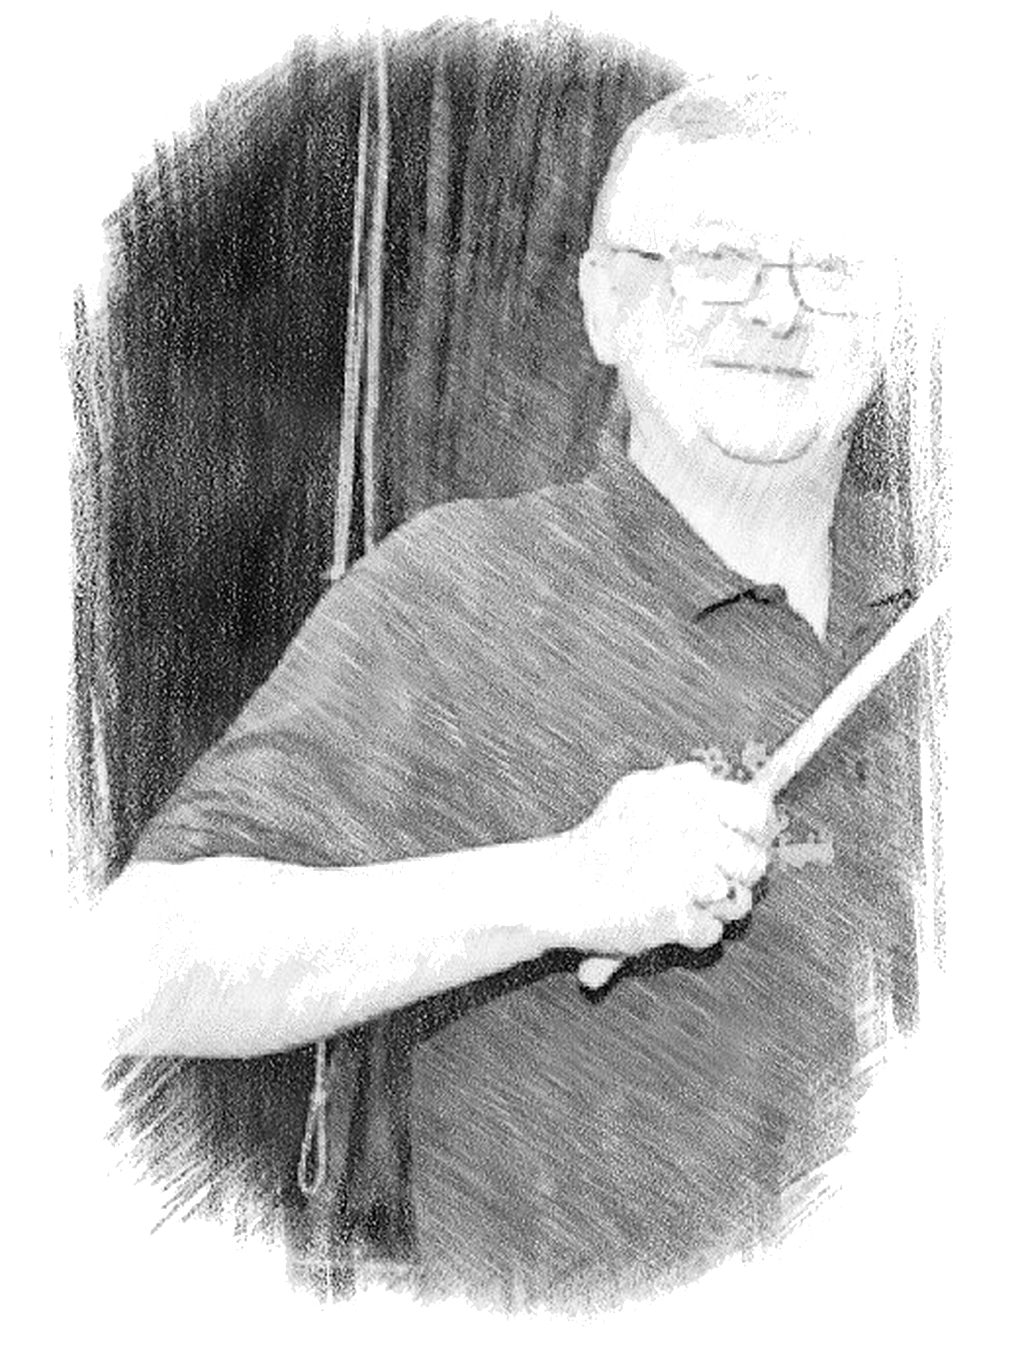 Lorrimer Headley - Composed by John C Grant (https://johncgrant.com). Traditional composer from Kilmarnock, Ayrshire, Scotland.